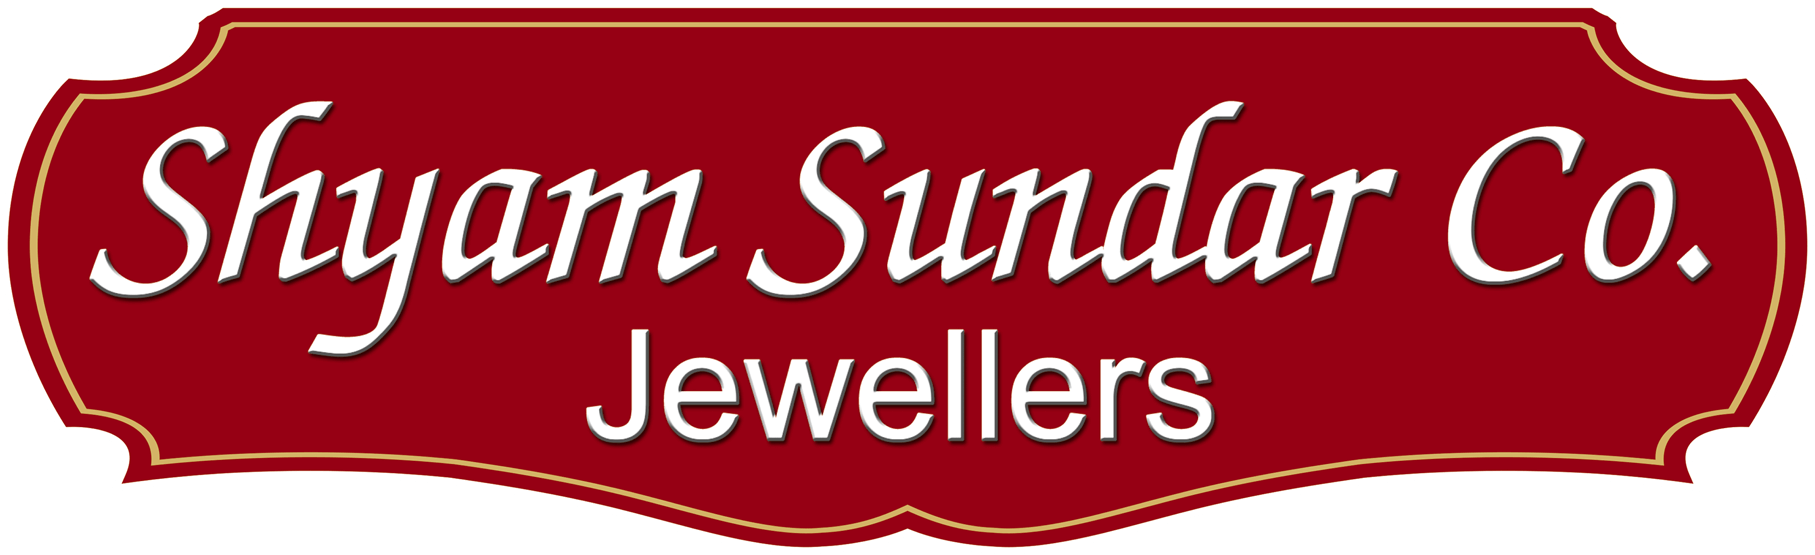 Shyam sundar co jewellers logo